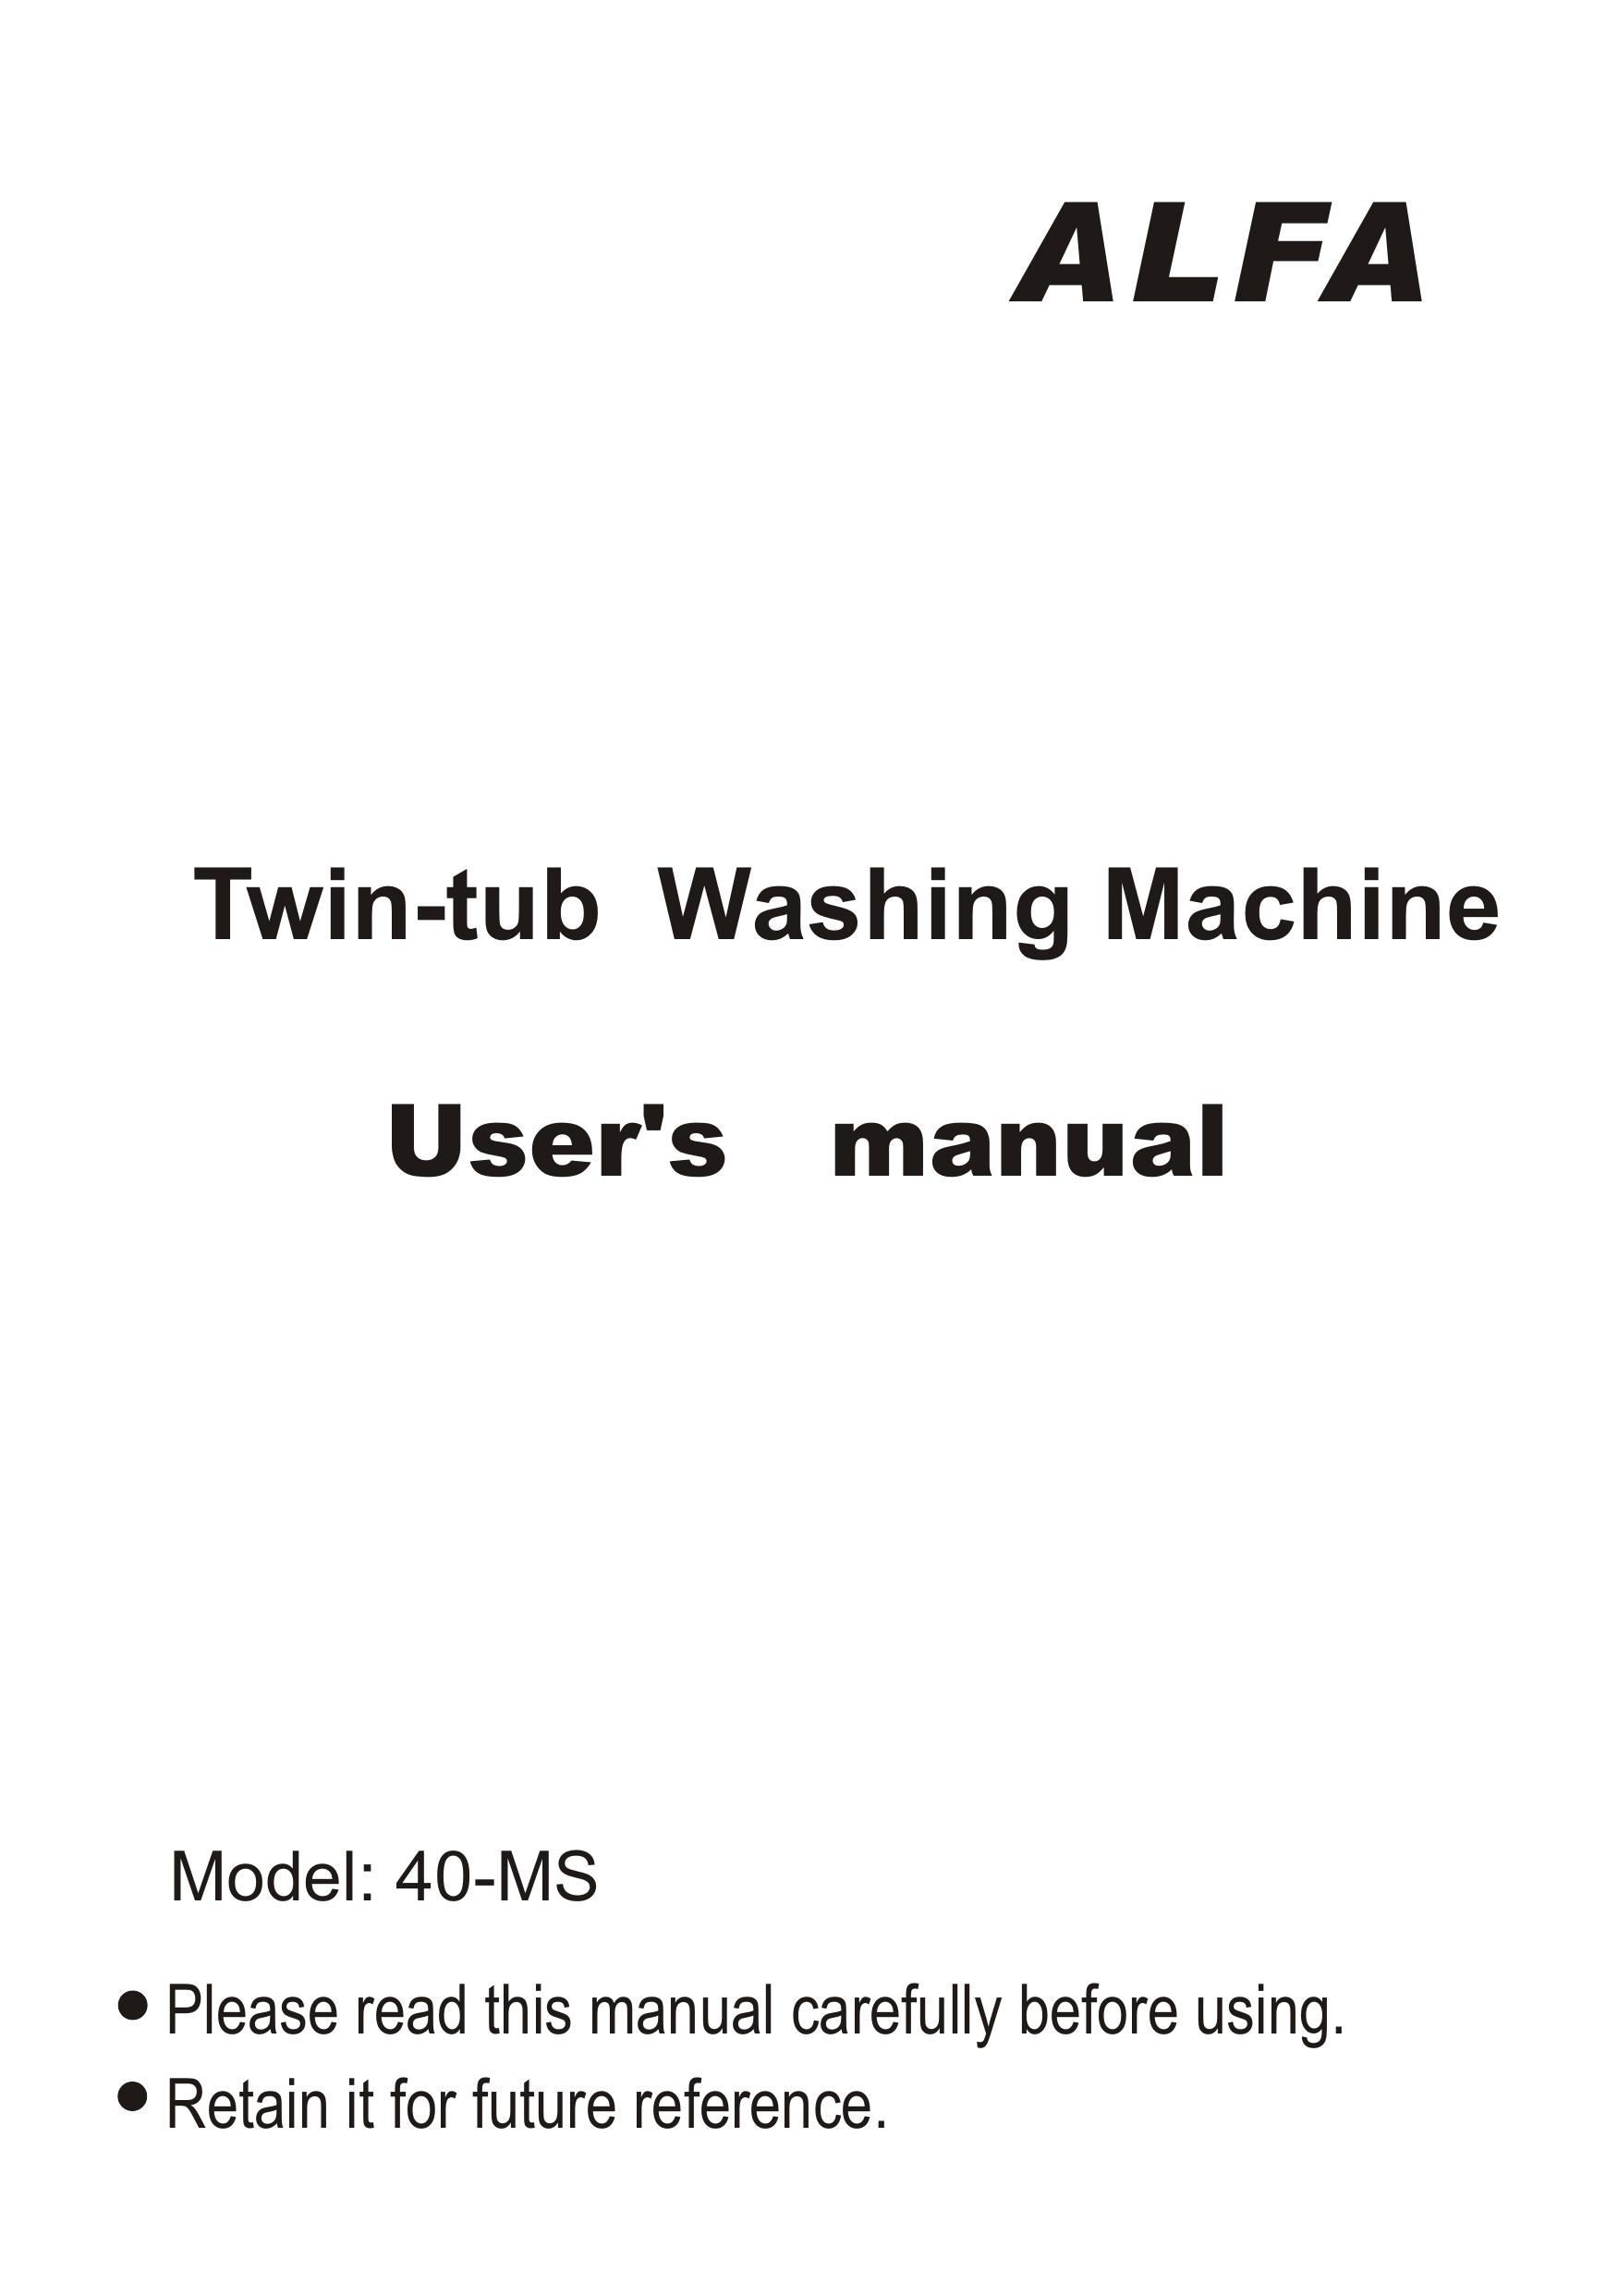 ALFA 40-MS Washer/Dryer User Manual